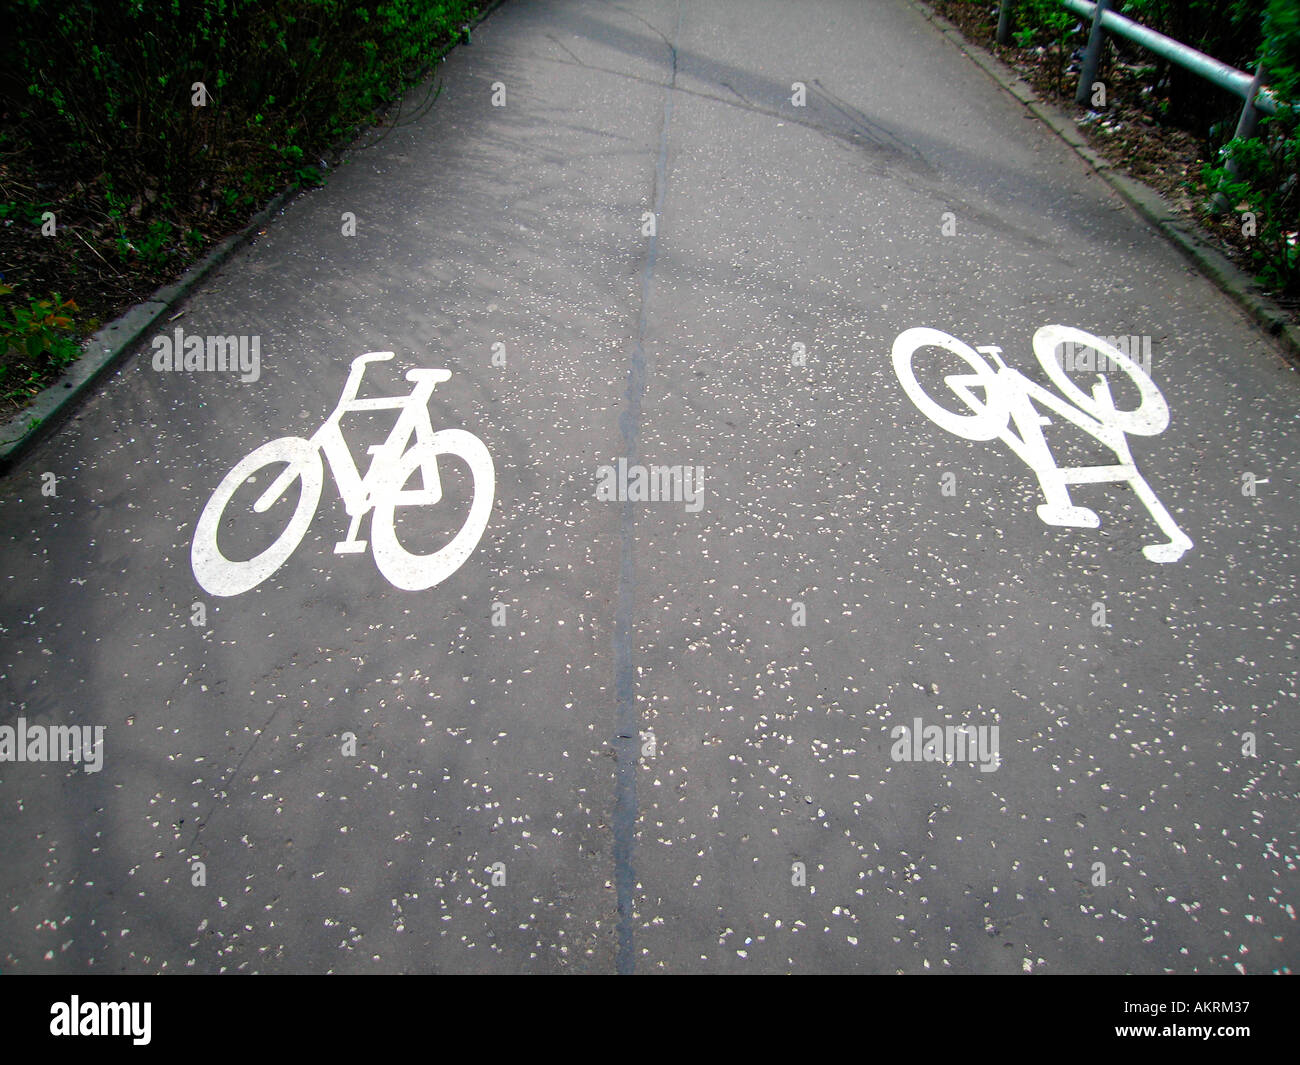 Two way cycle lane markings Stock Photo